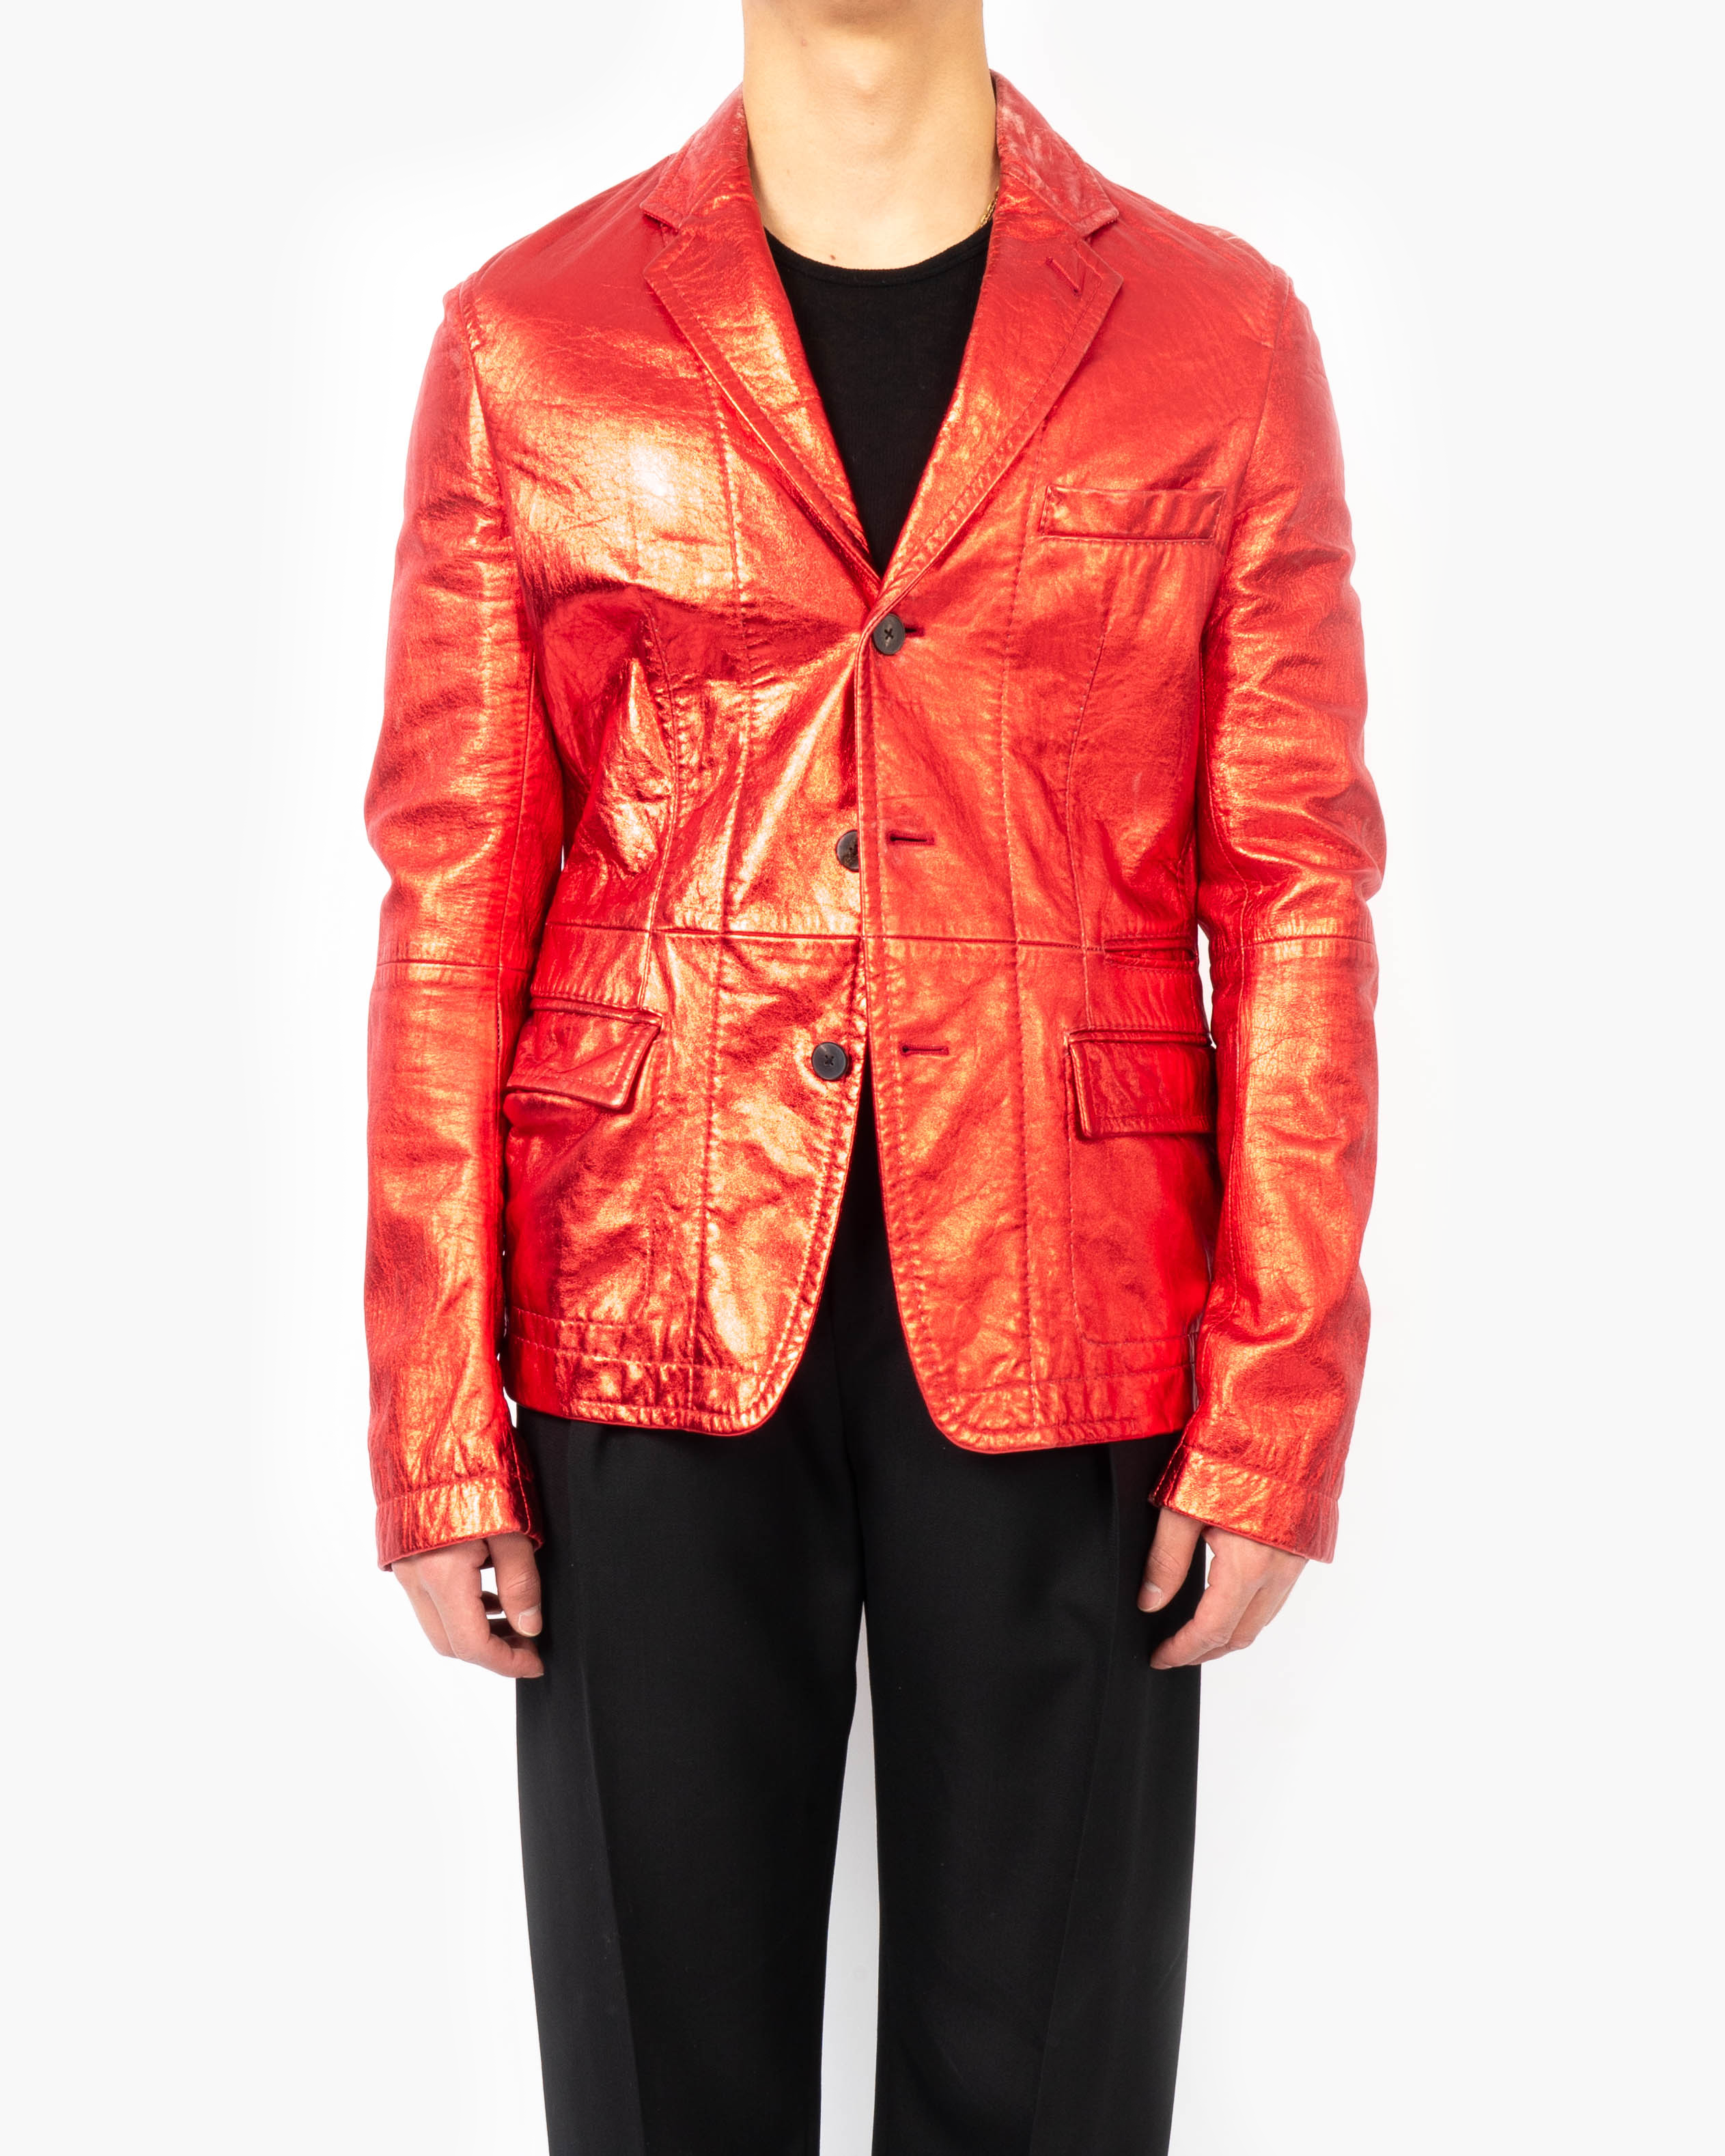 SS17 Red Metallic Leather Blazer